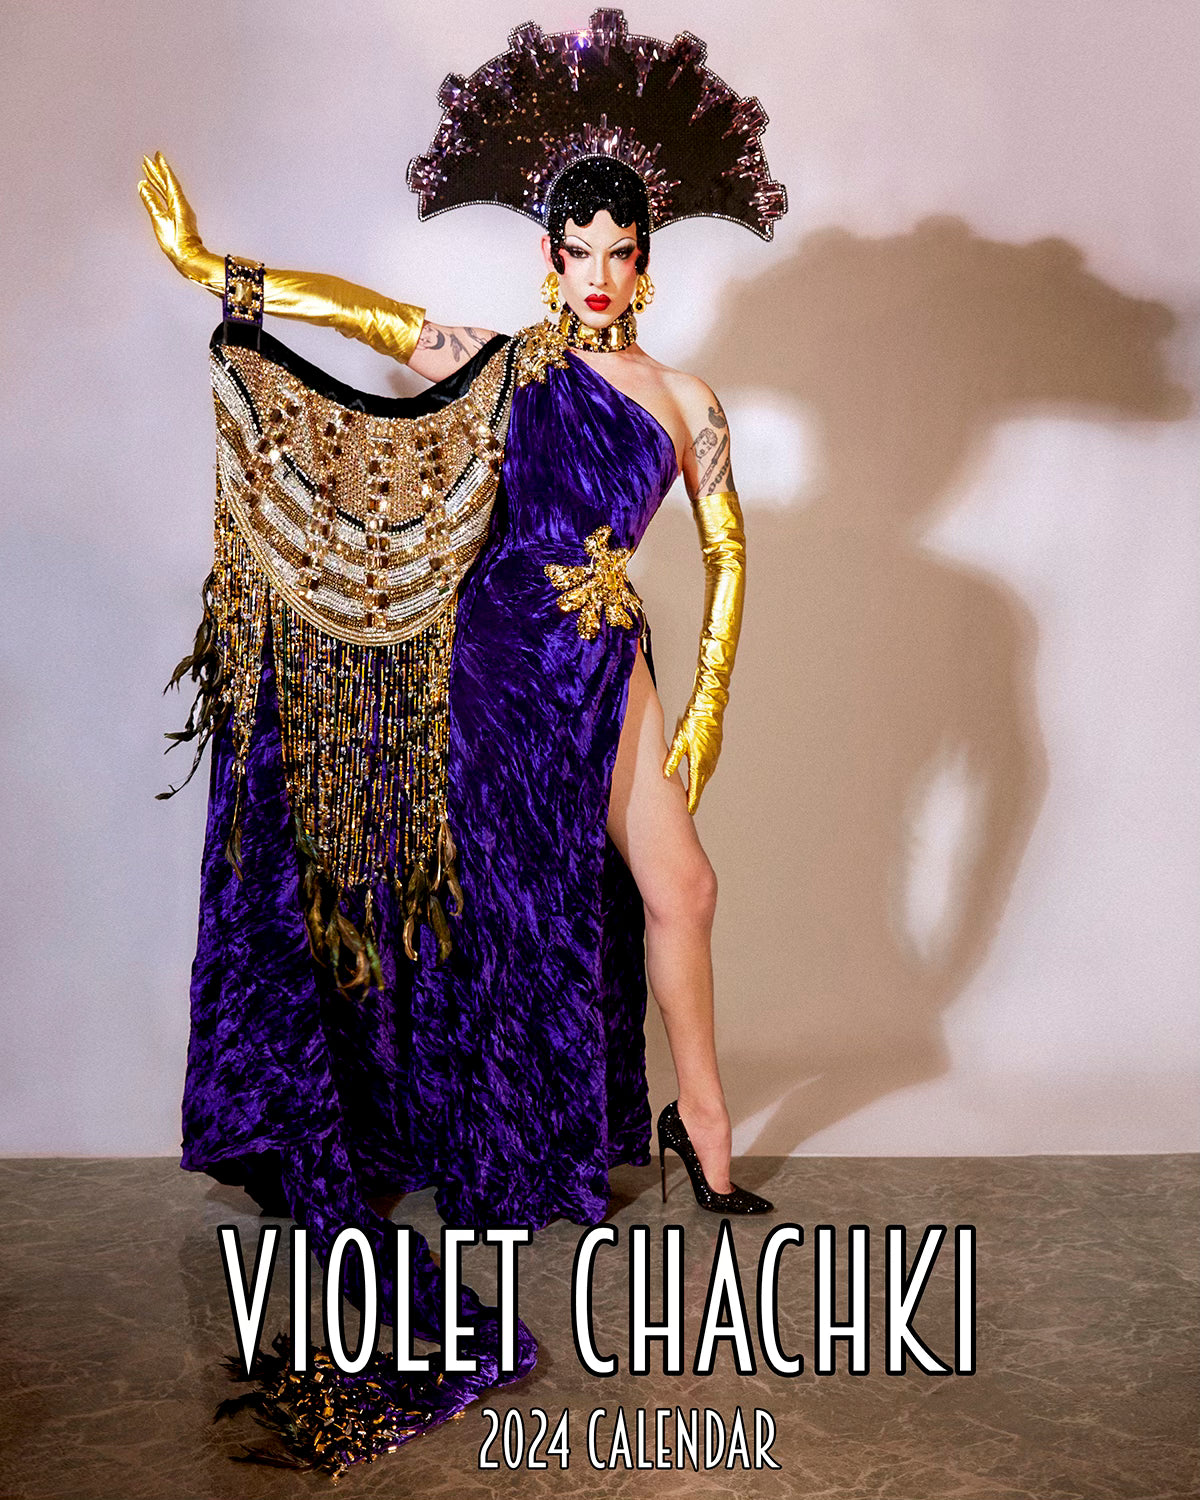 The 2024 Violet Chachki Calendar